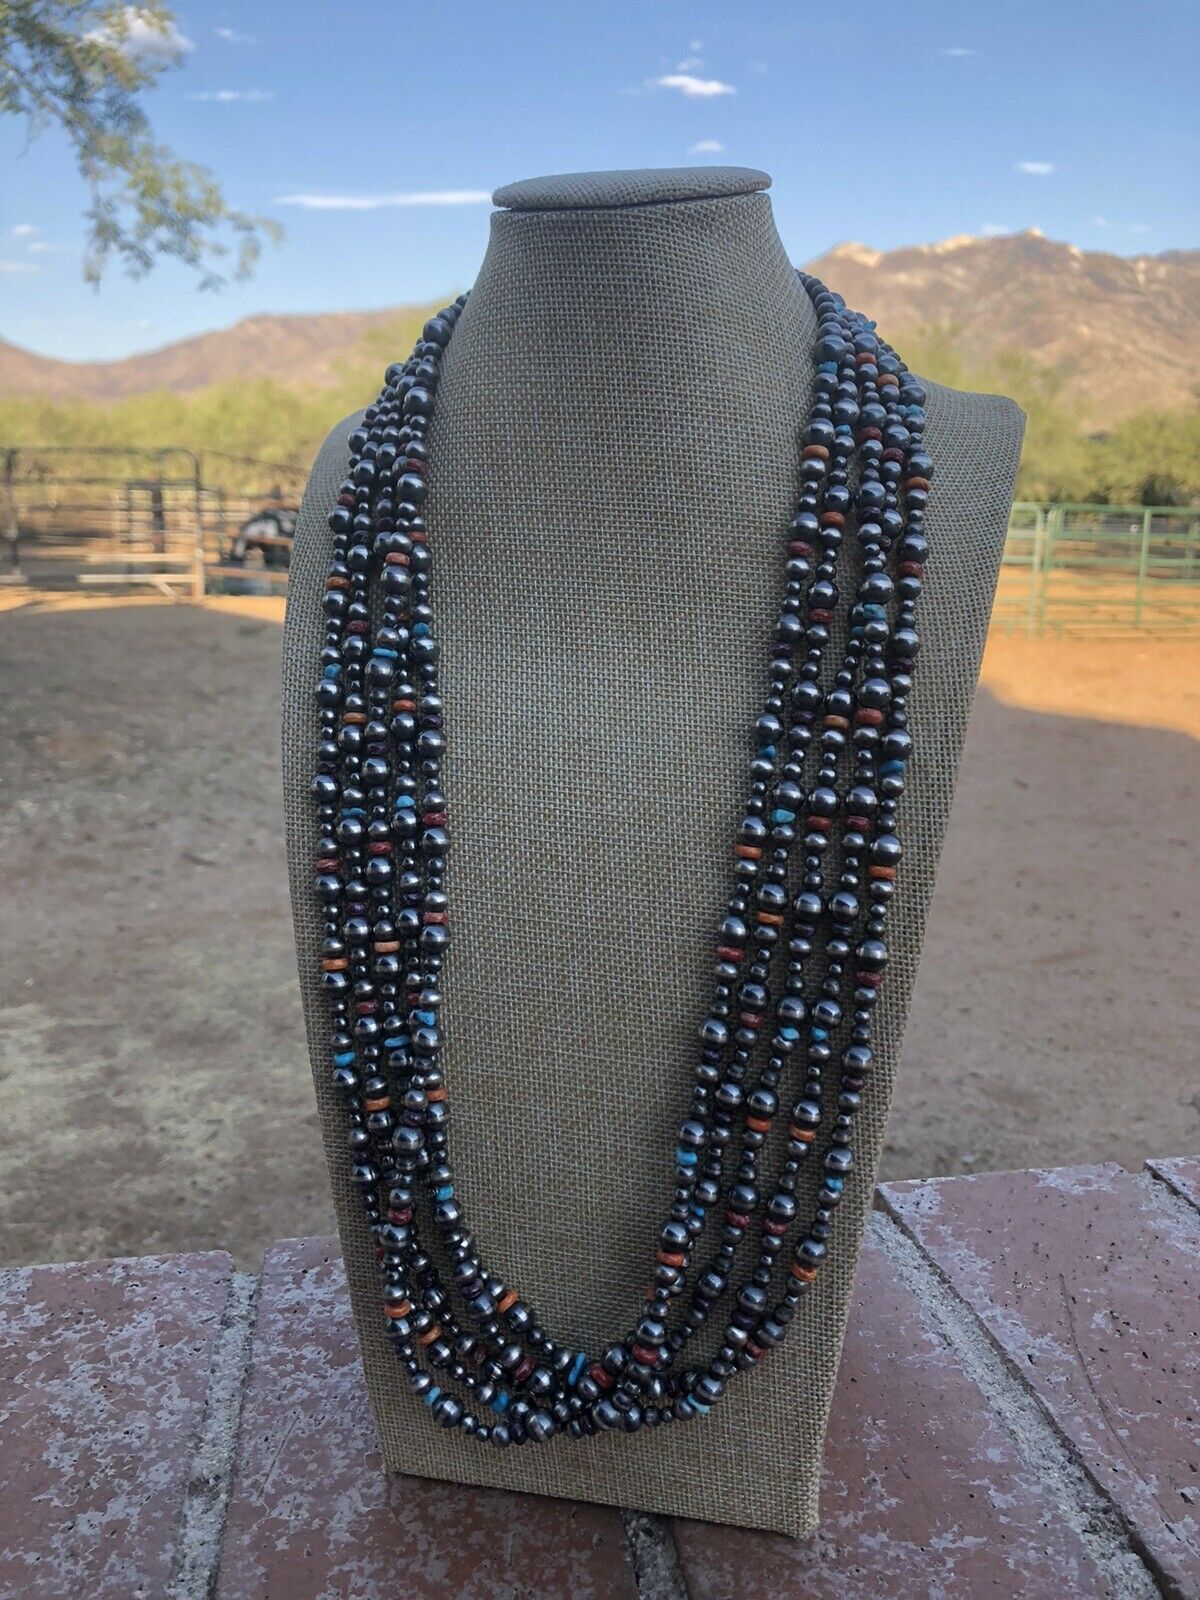 Tarazed Gems & Jewellery - Diné (Navajo) Silver Beaded Necklace